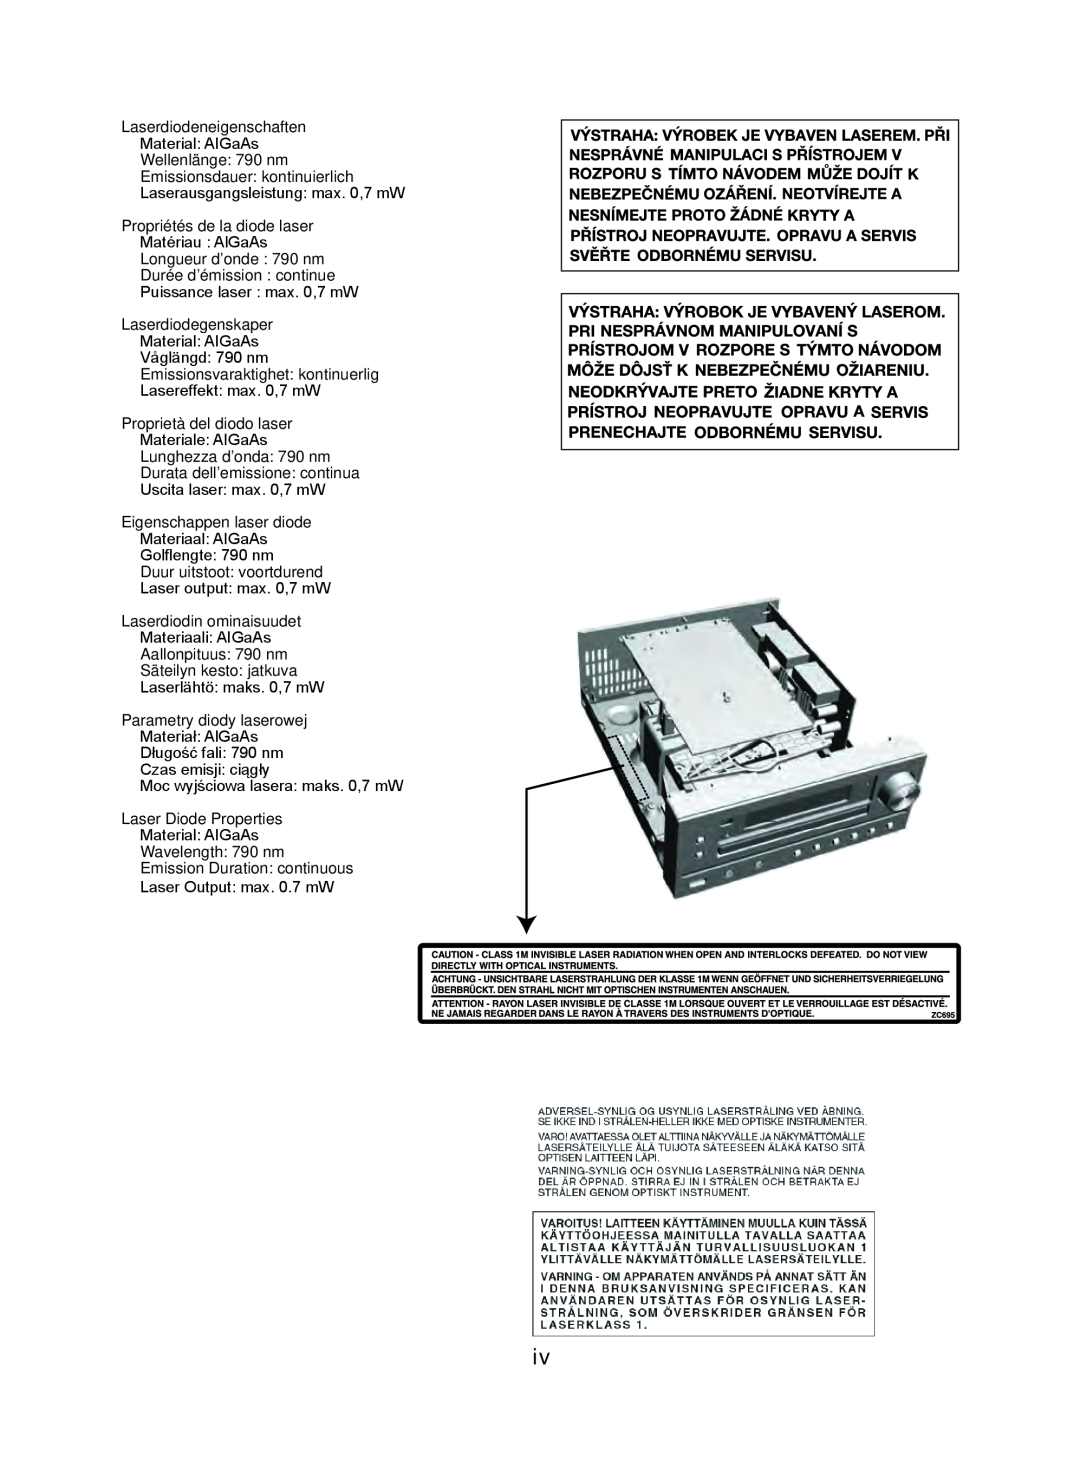 Sharp XL-DAB102DH operation manual Laserdiodegenskaper Material AIGaAs 